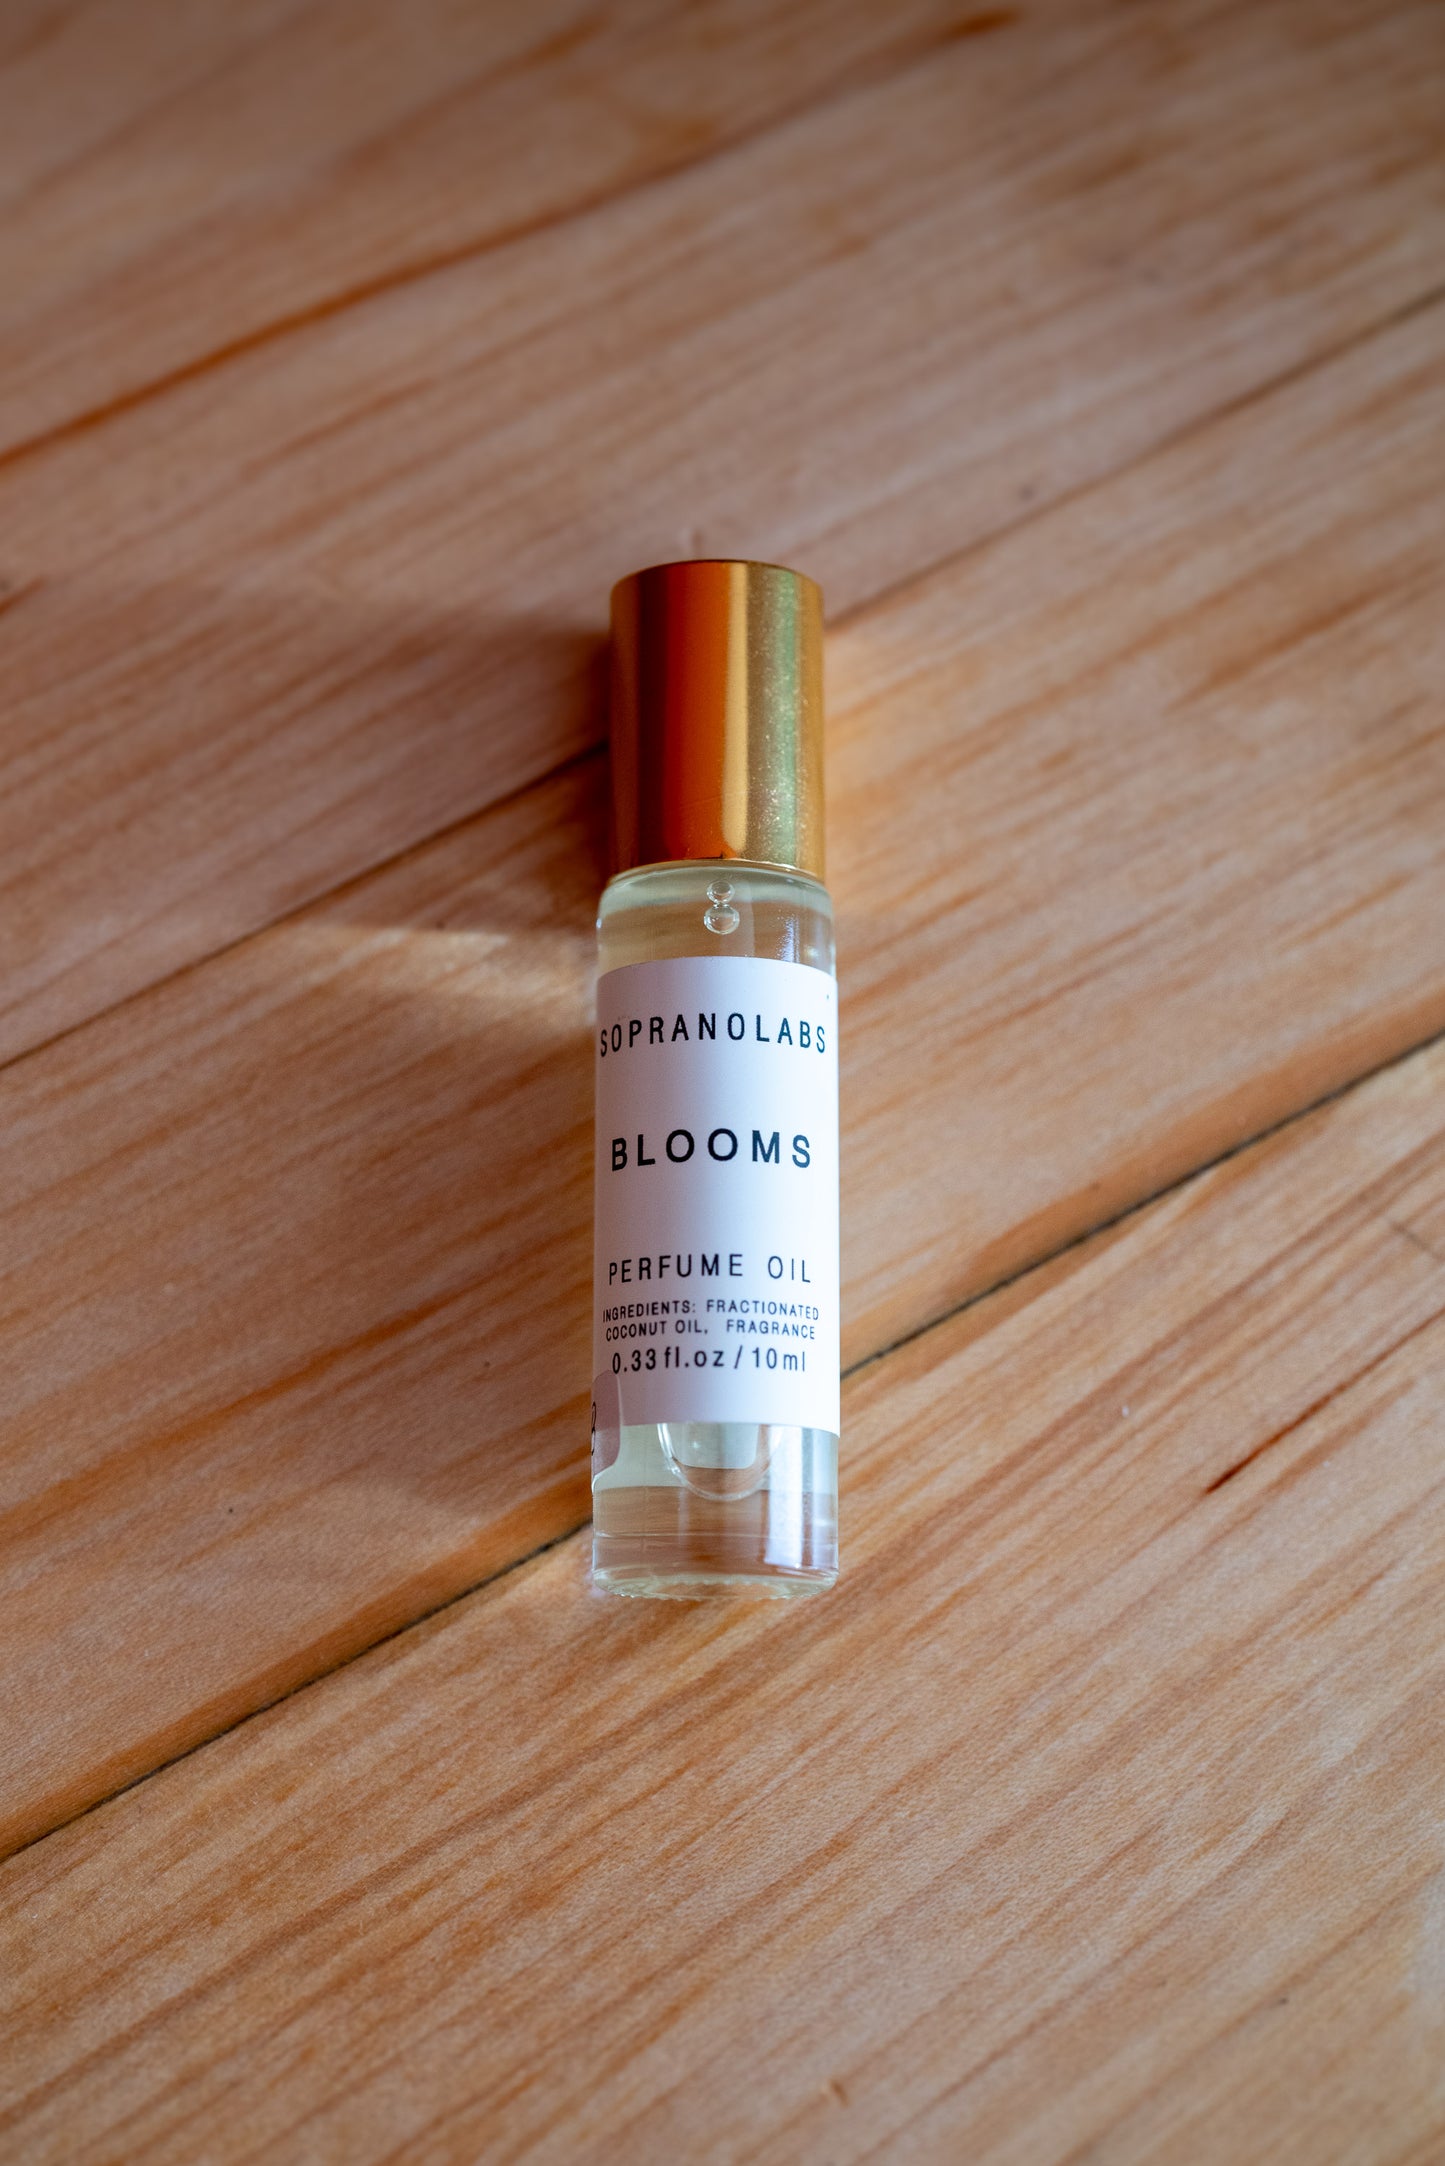 Sopranolabs Vegan Perfume Oil - Blooms